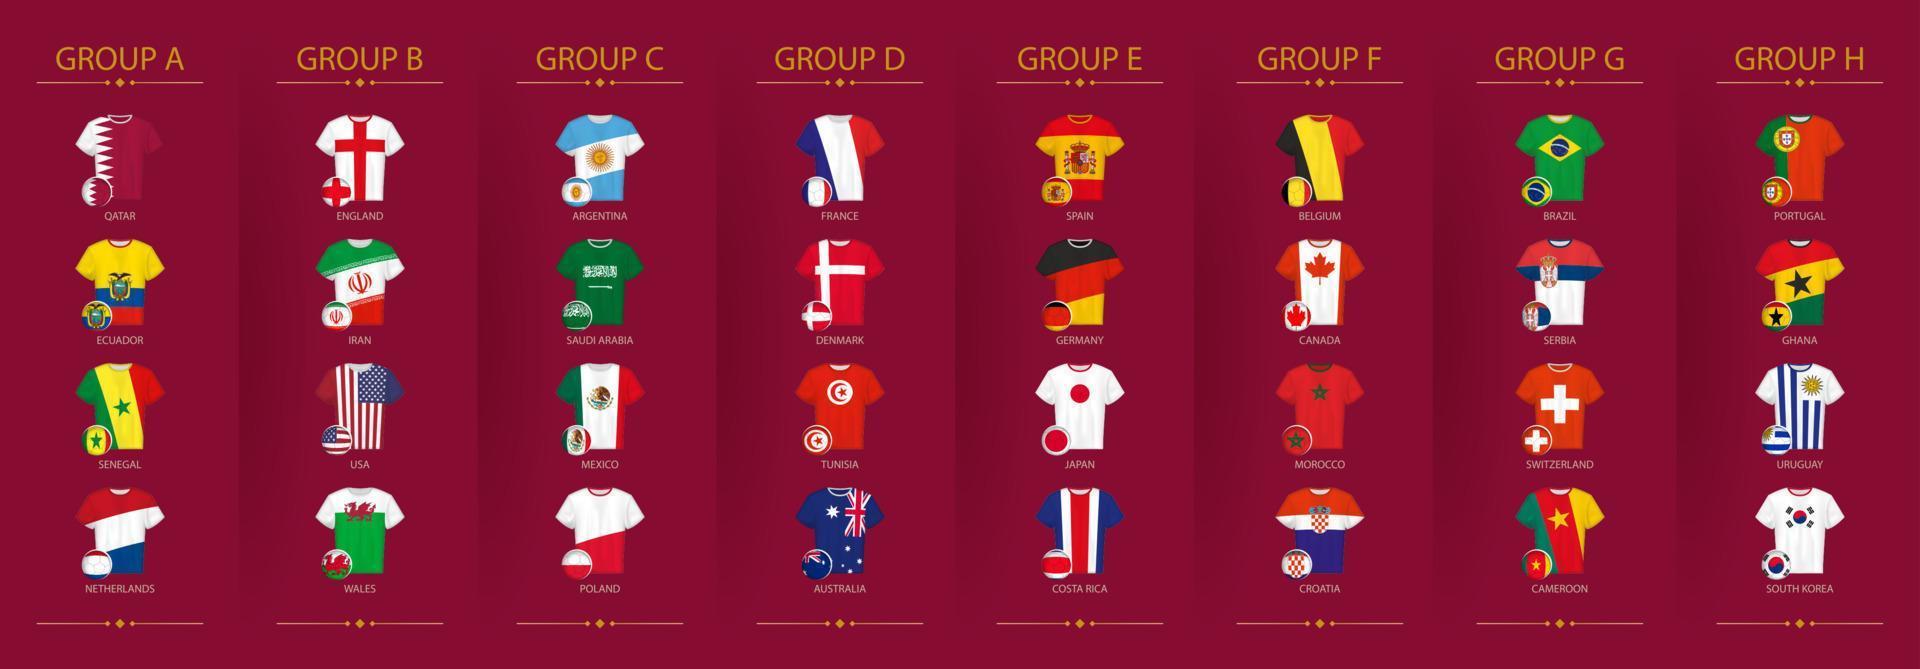 Amerikaans voetbal truien en Amerikaans voetbal bal met vlag van Amerikaans voetbal 2022 wedstrijd deelnemers gesorteerd door groep. vector